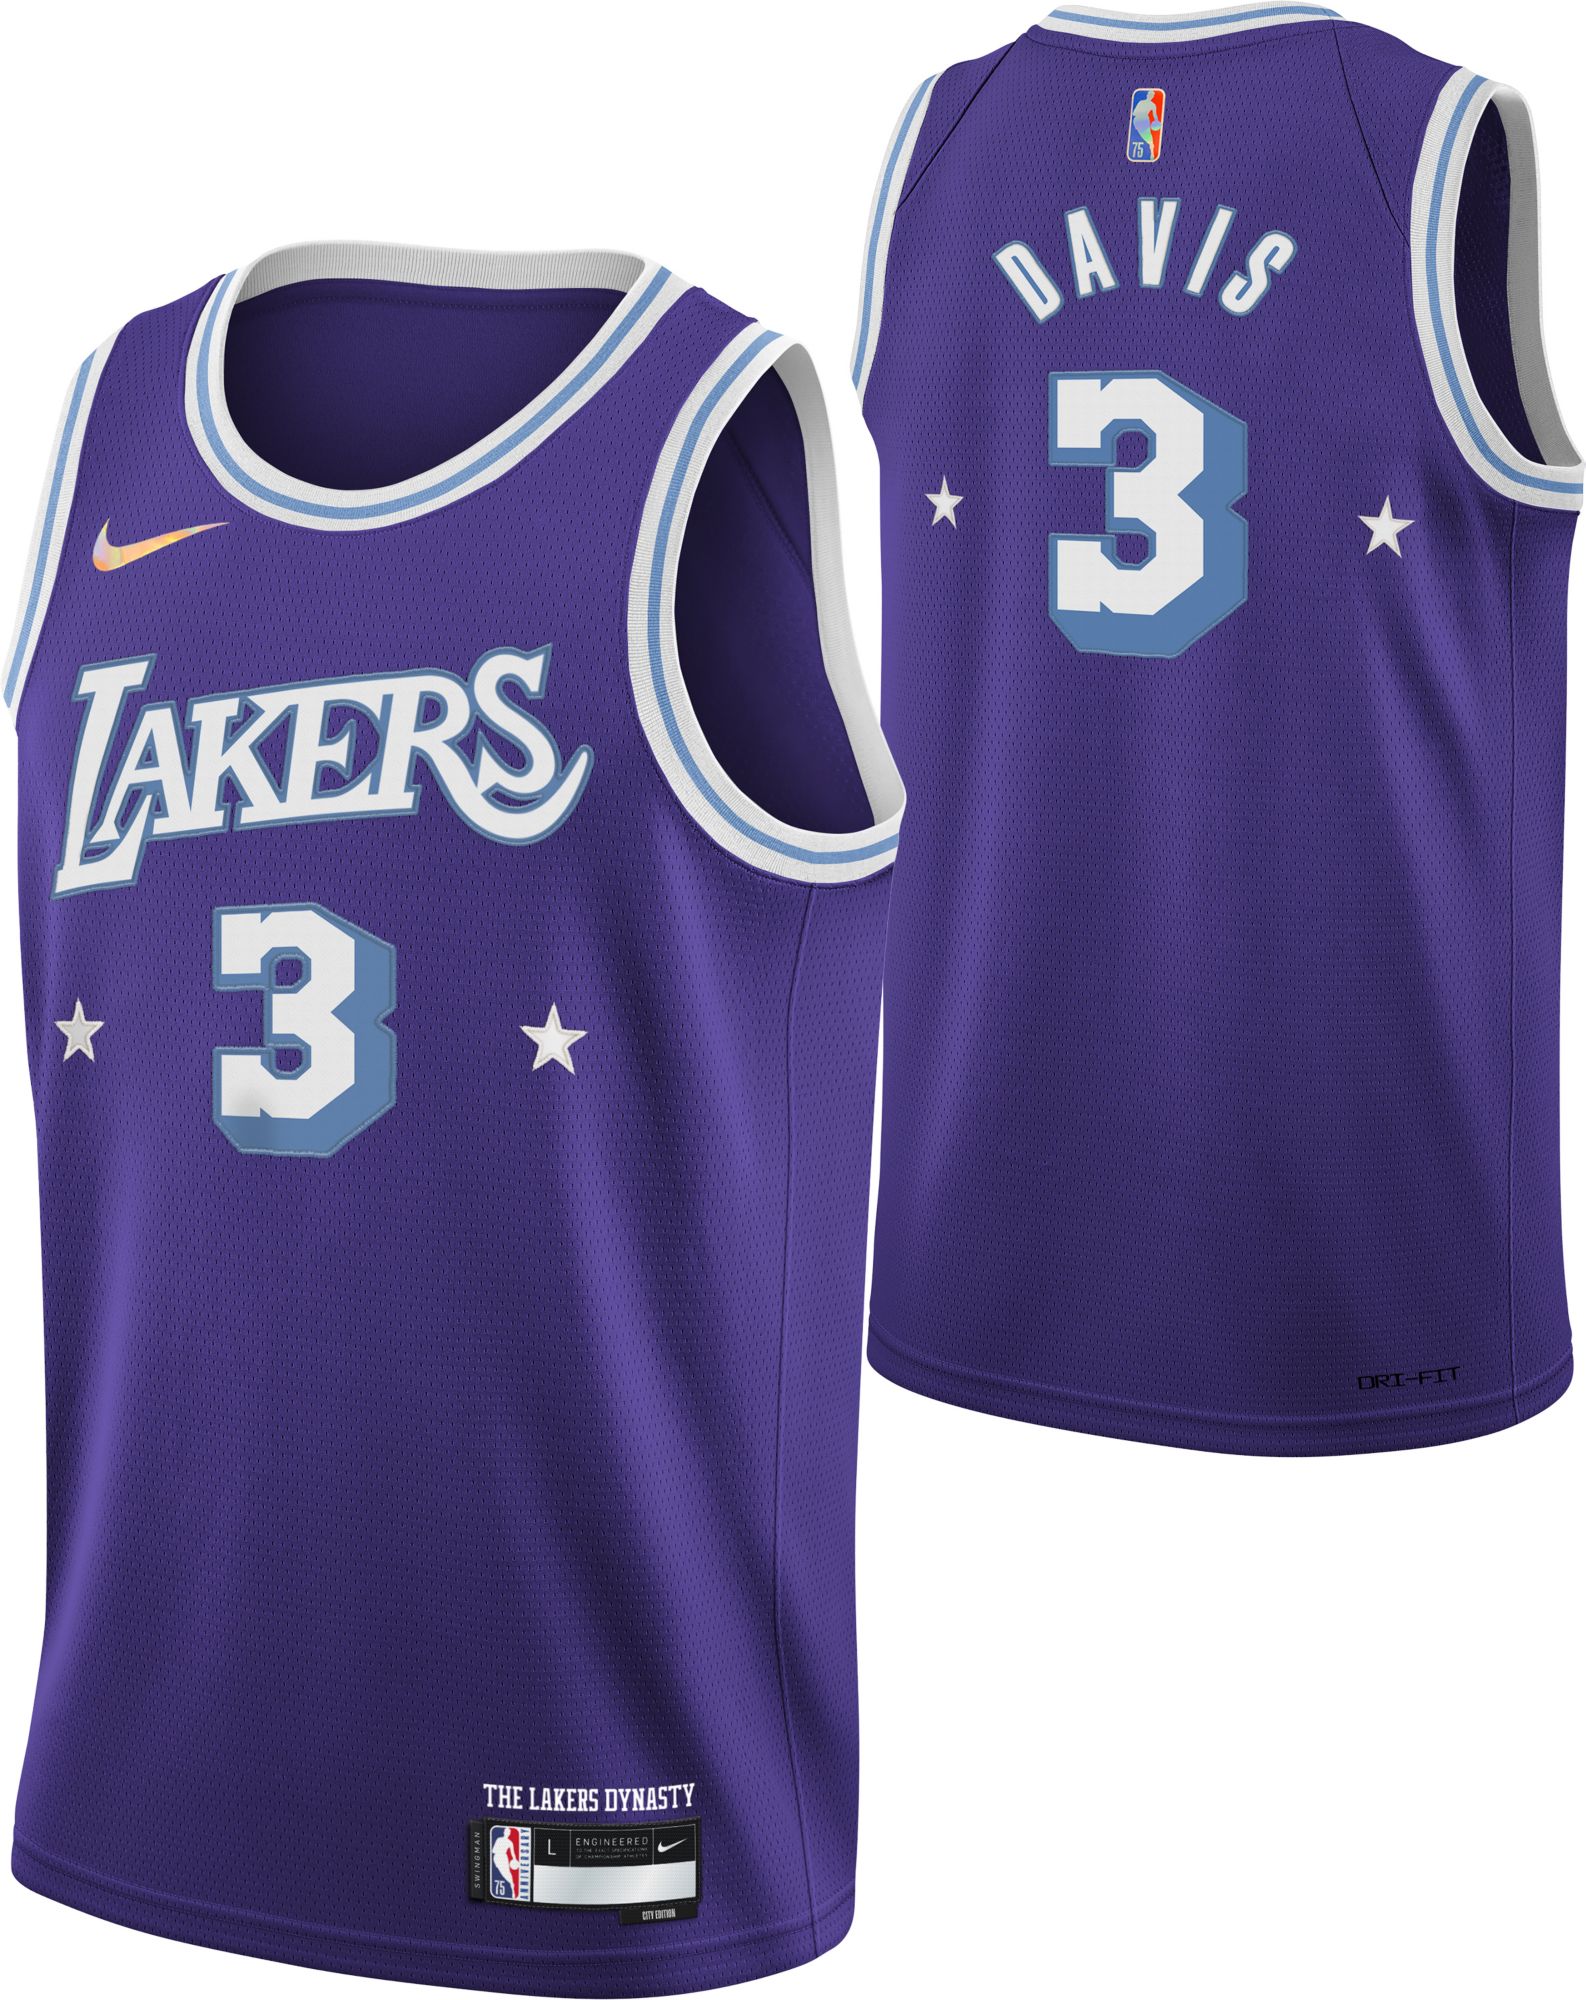 2021-23 LA Lakers James #6 Nike Swingman Home Jersey (M)